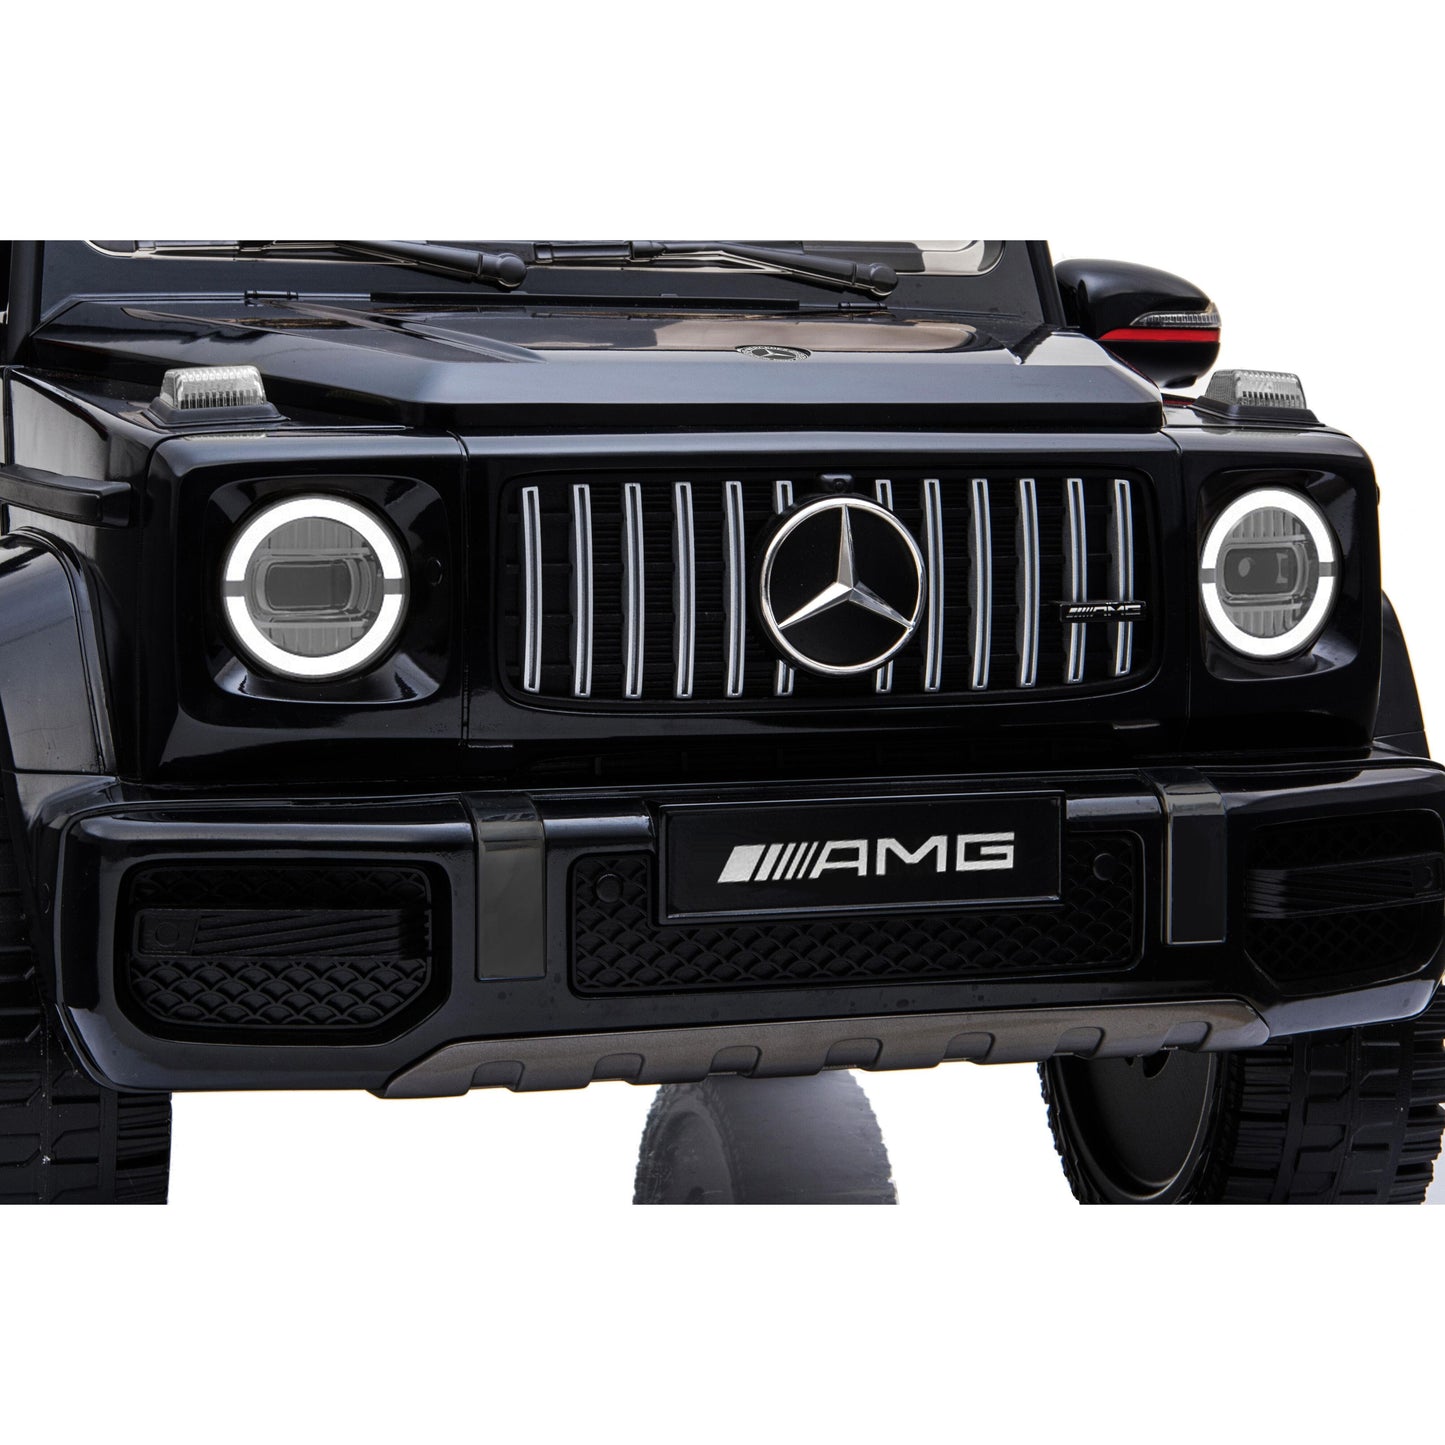 Maxi Size Mercedes G-Wagon G63 12v Ride on Car with Remote - Metallic Black